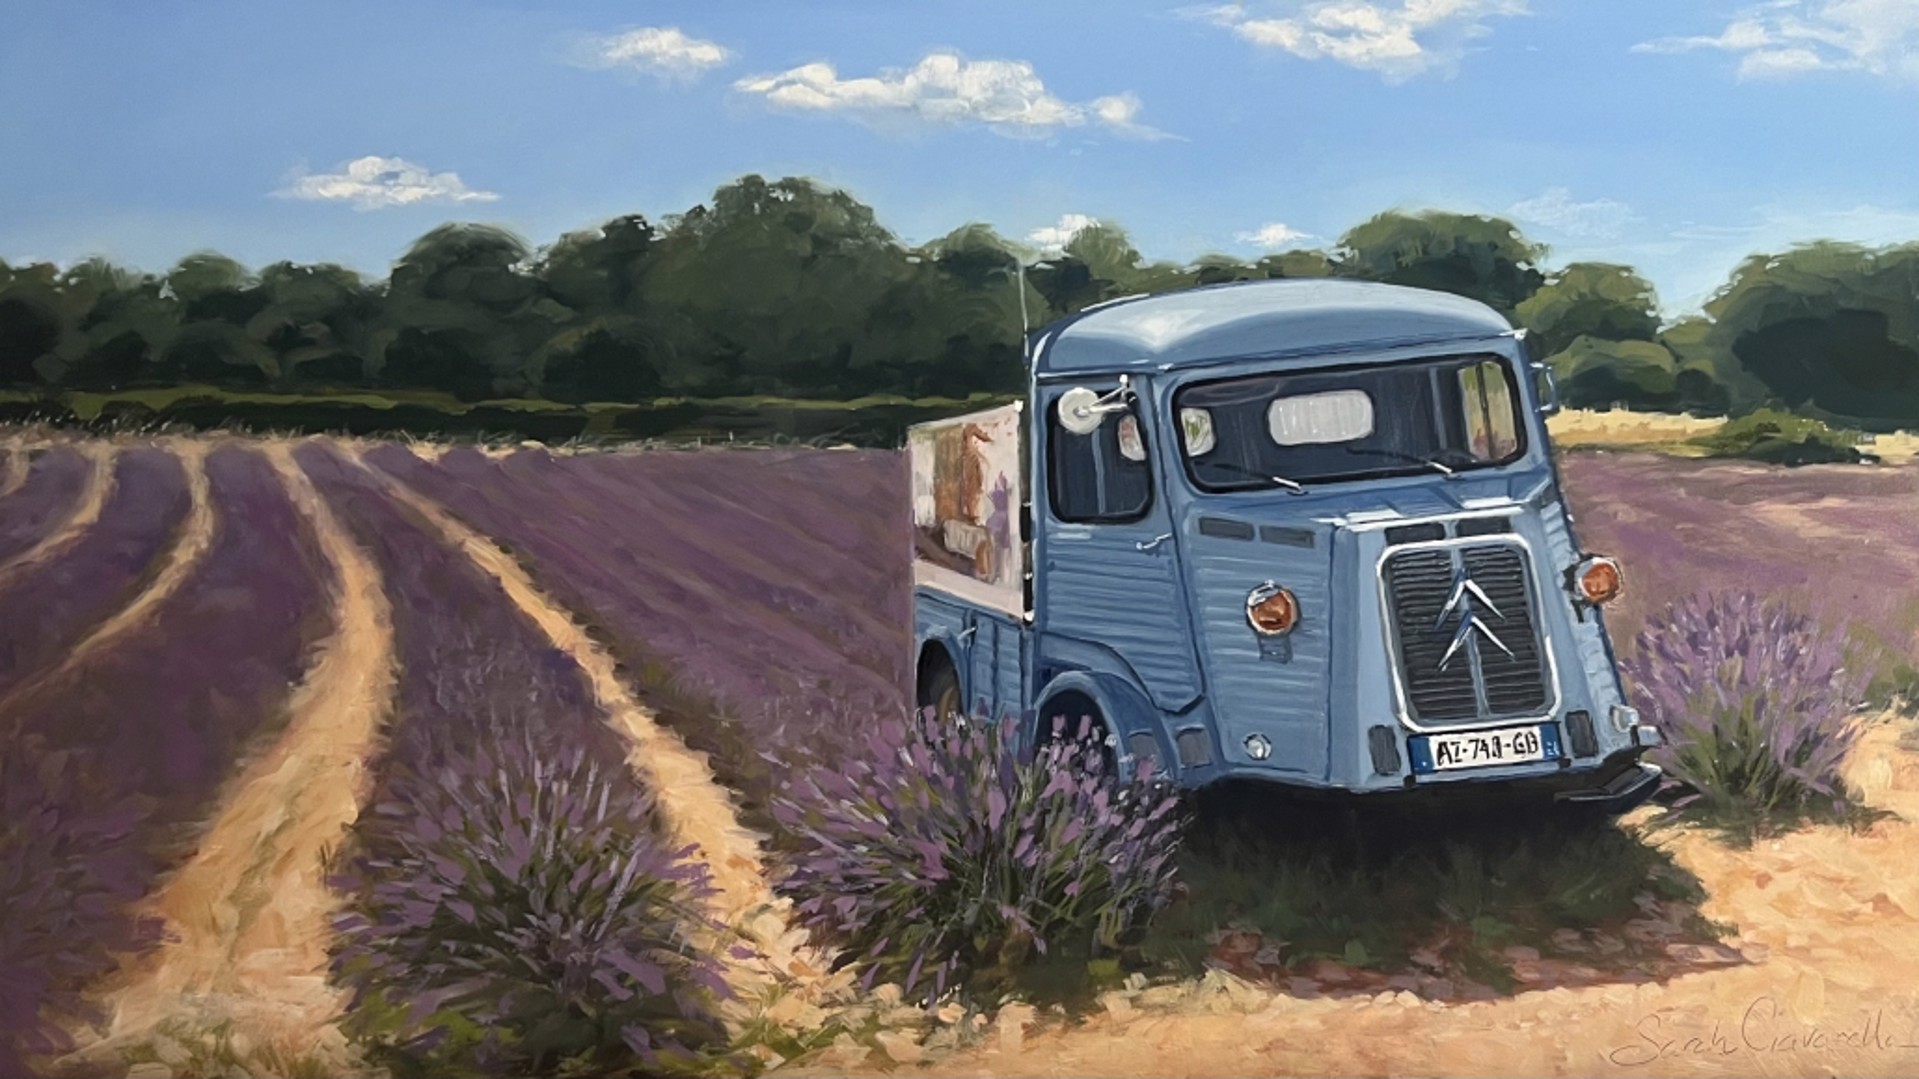 French Lavender by Sarah Ciavarella